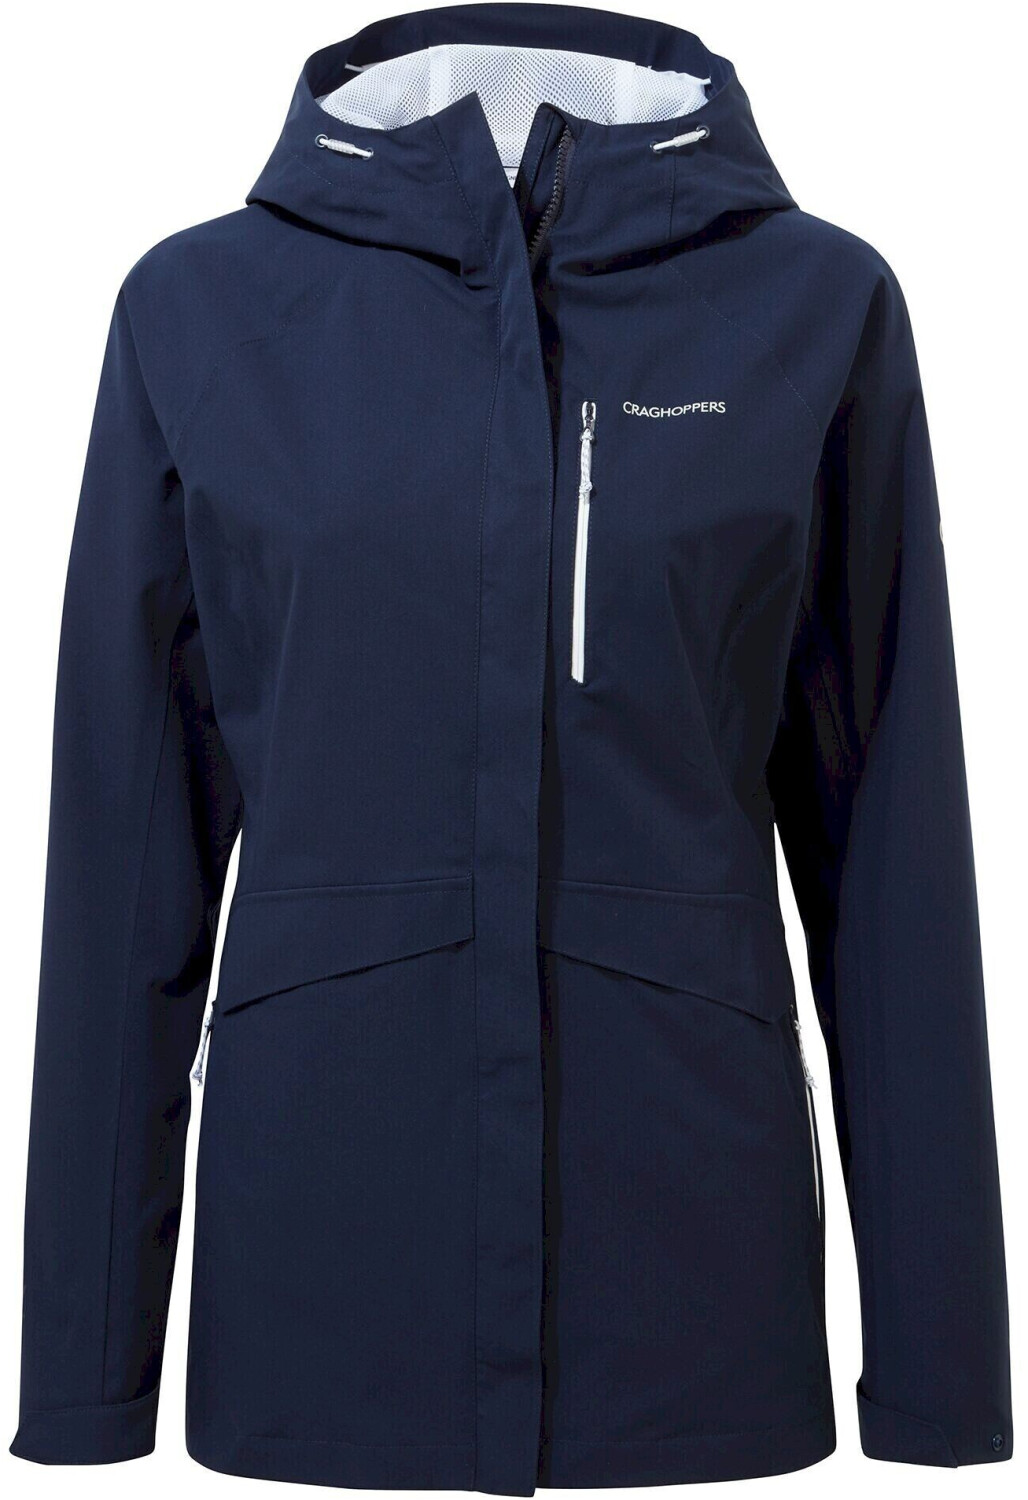 Buy Craghoppers Women's Waterproof Caldbeck Jacket from £41.95